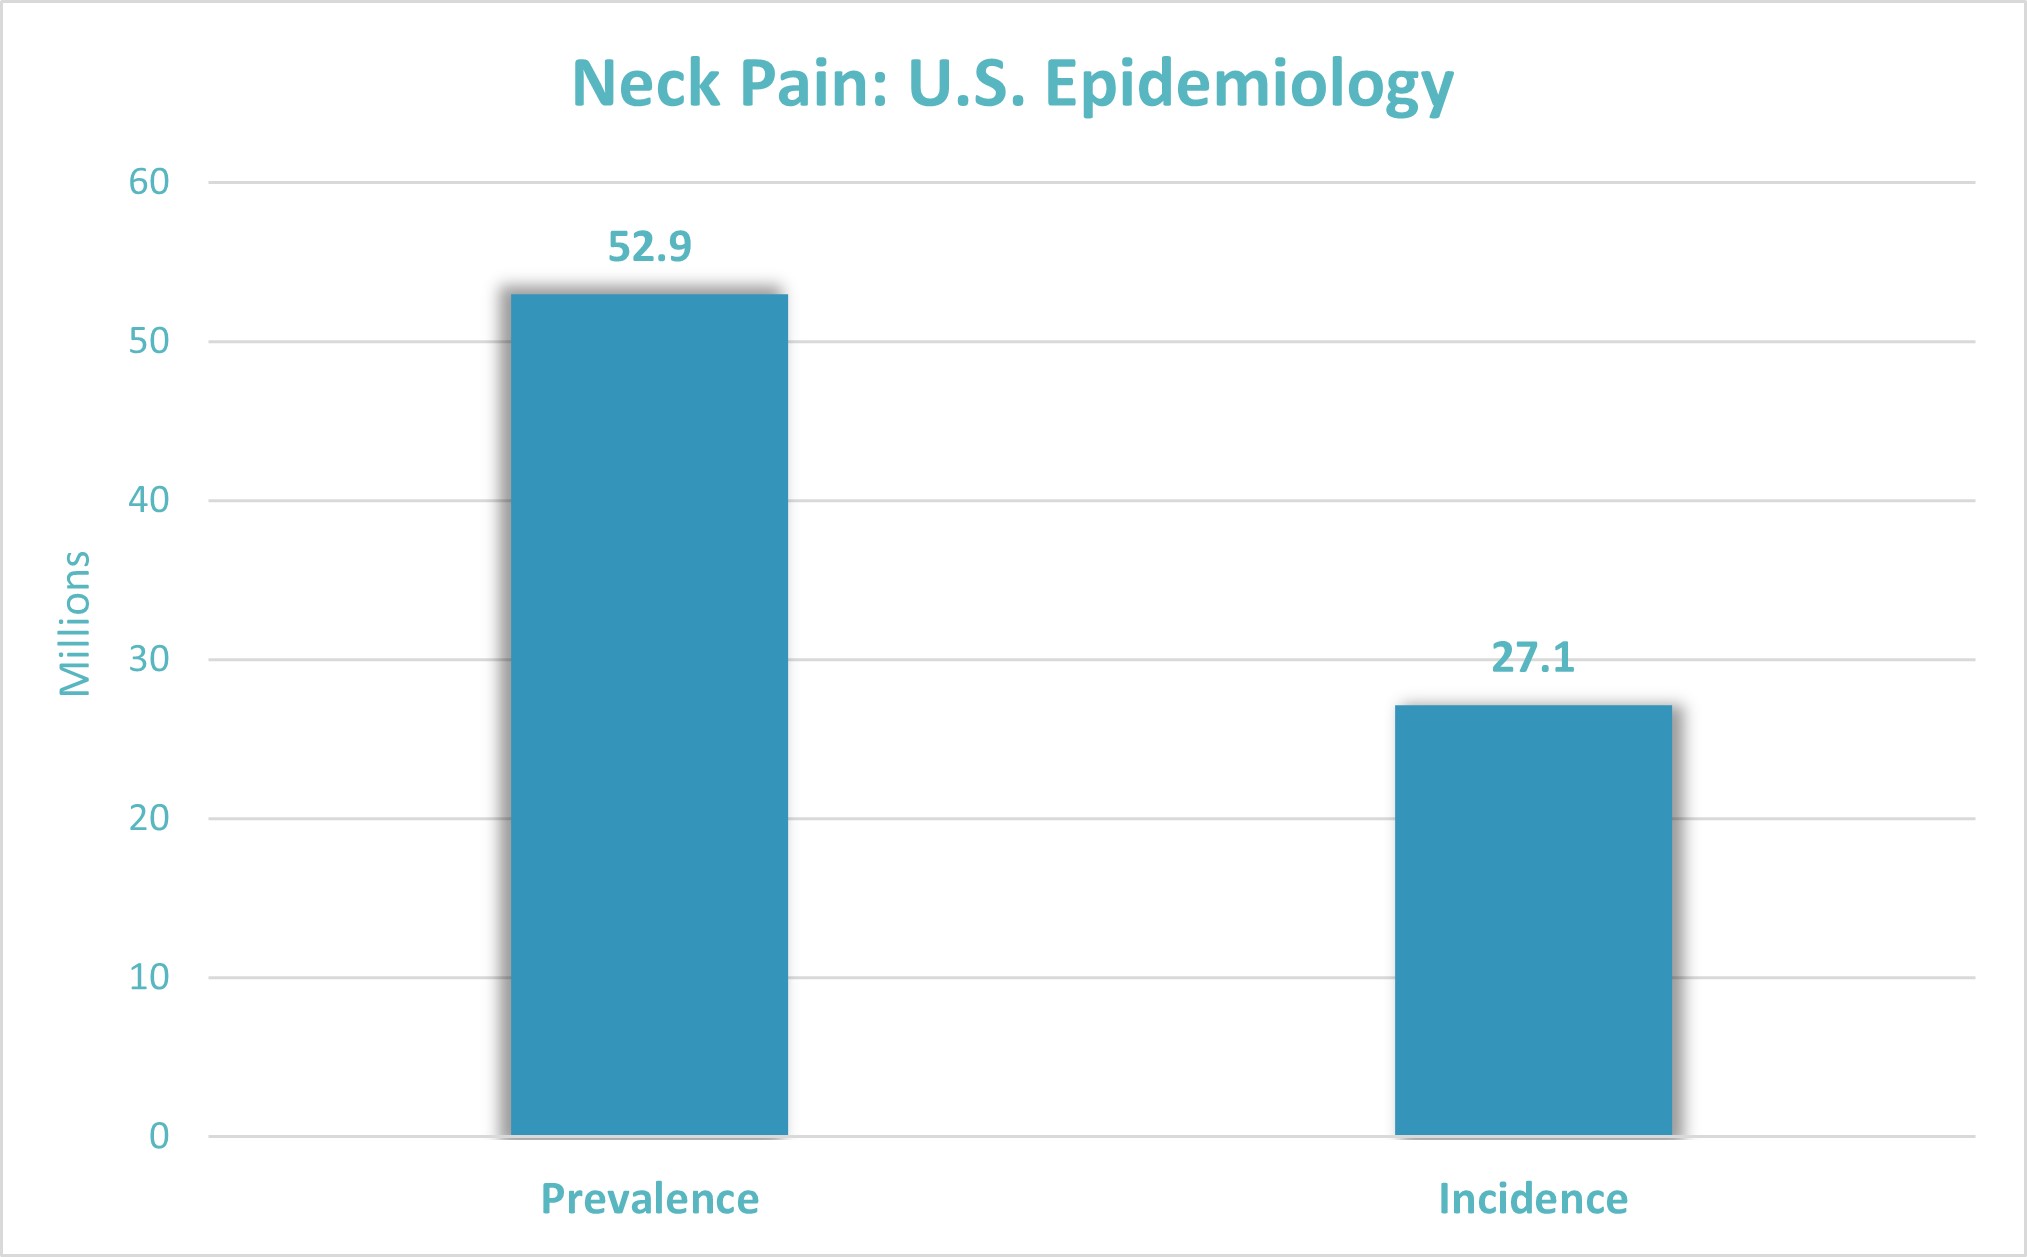 Neck Pain: U.S. Epidemiology (in millions)